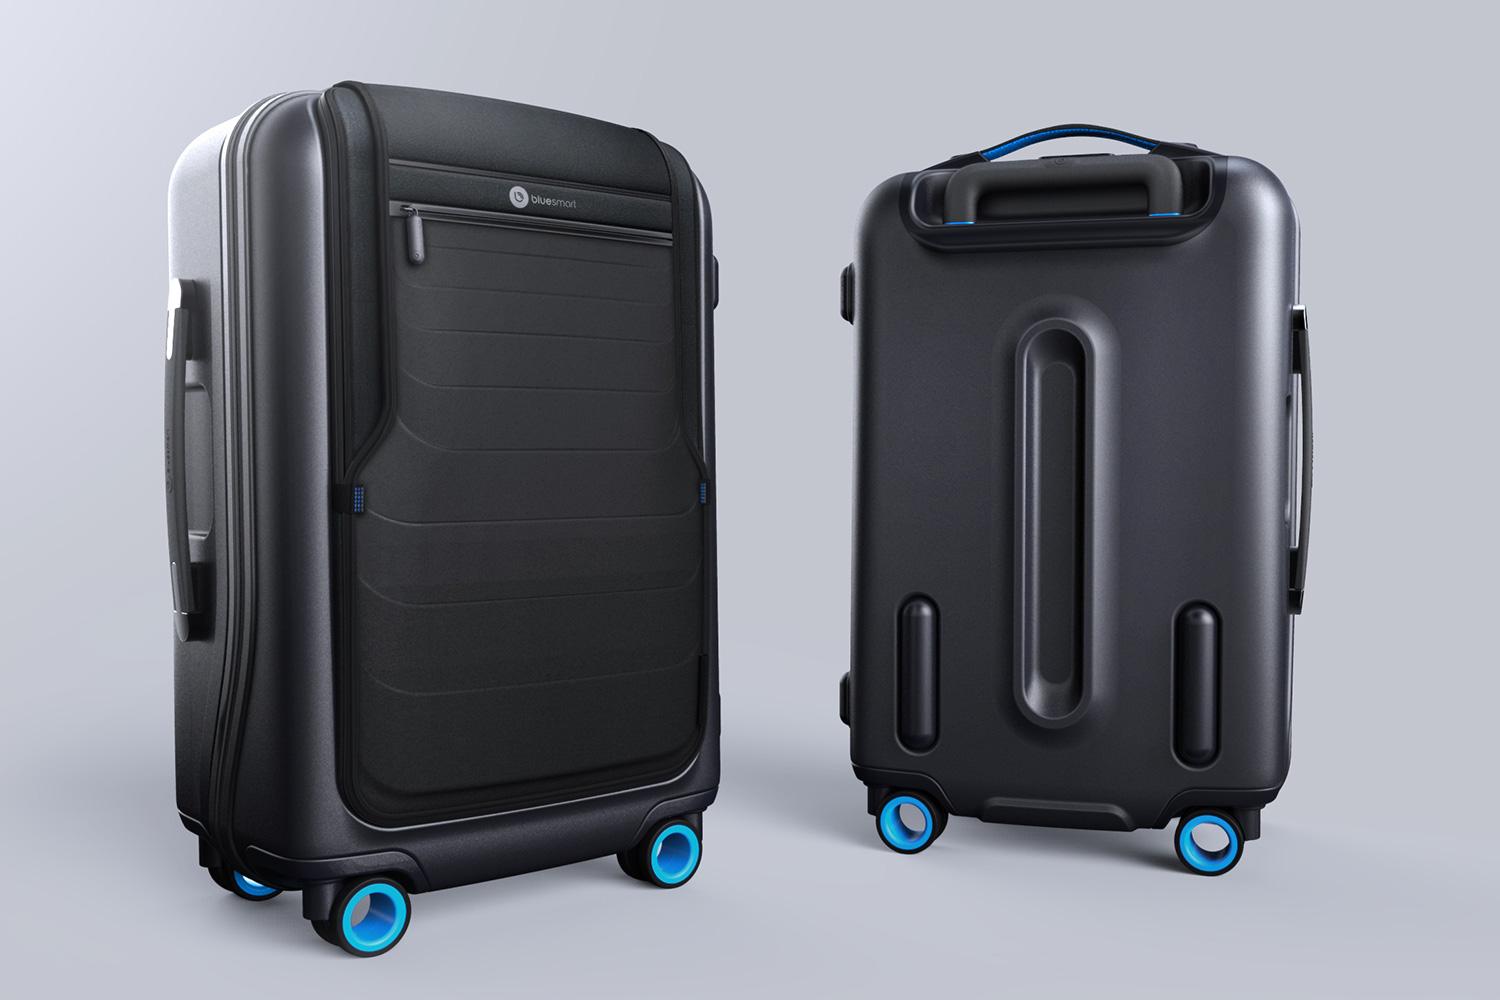 Bluesmart connected suitcase